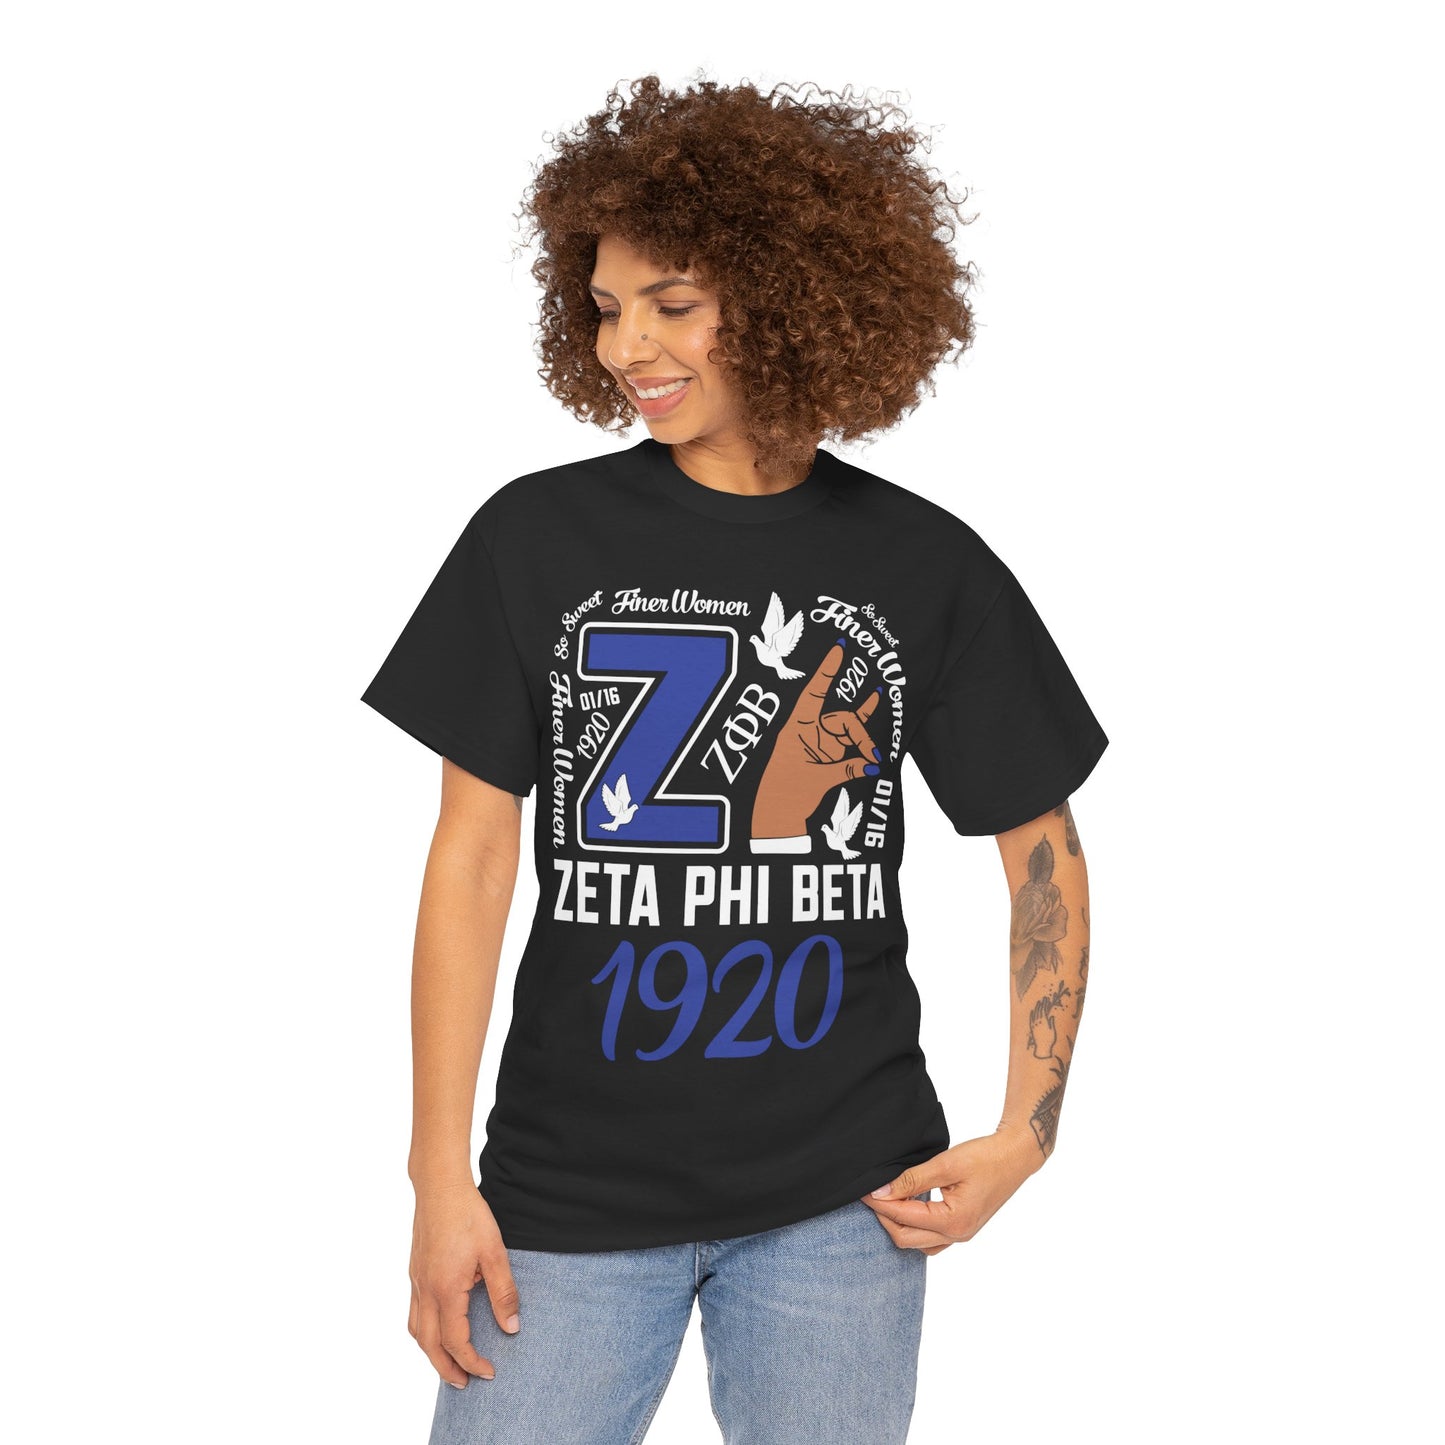 1920 Zeta Phi Beta T-Shirt